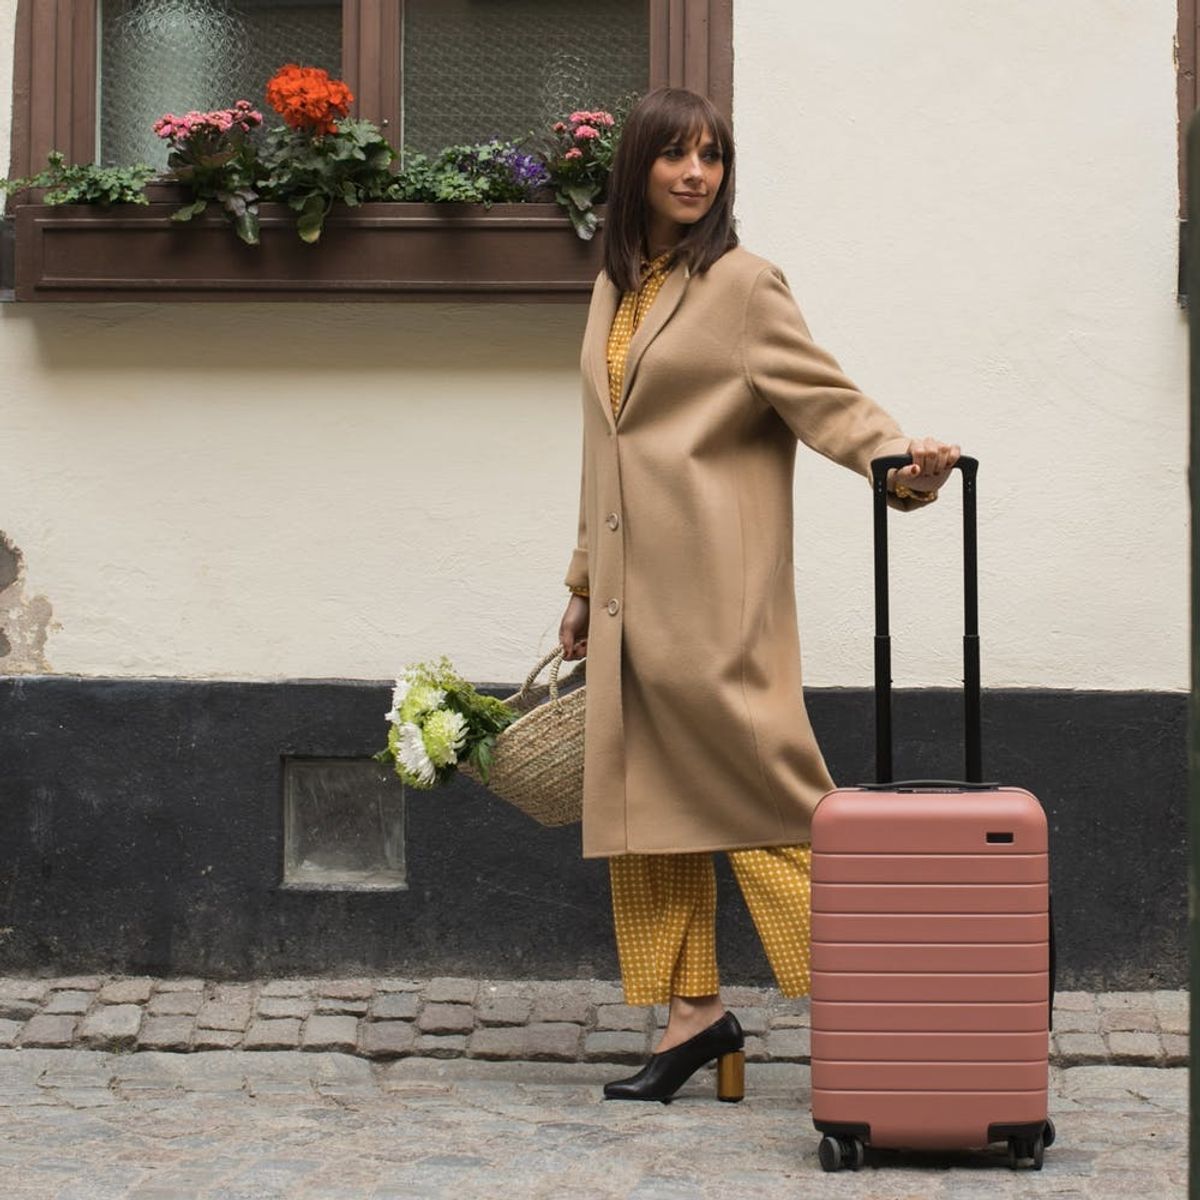 Rashida Jones Teams Up With Your Fave Suitcase Brand